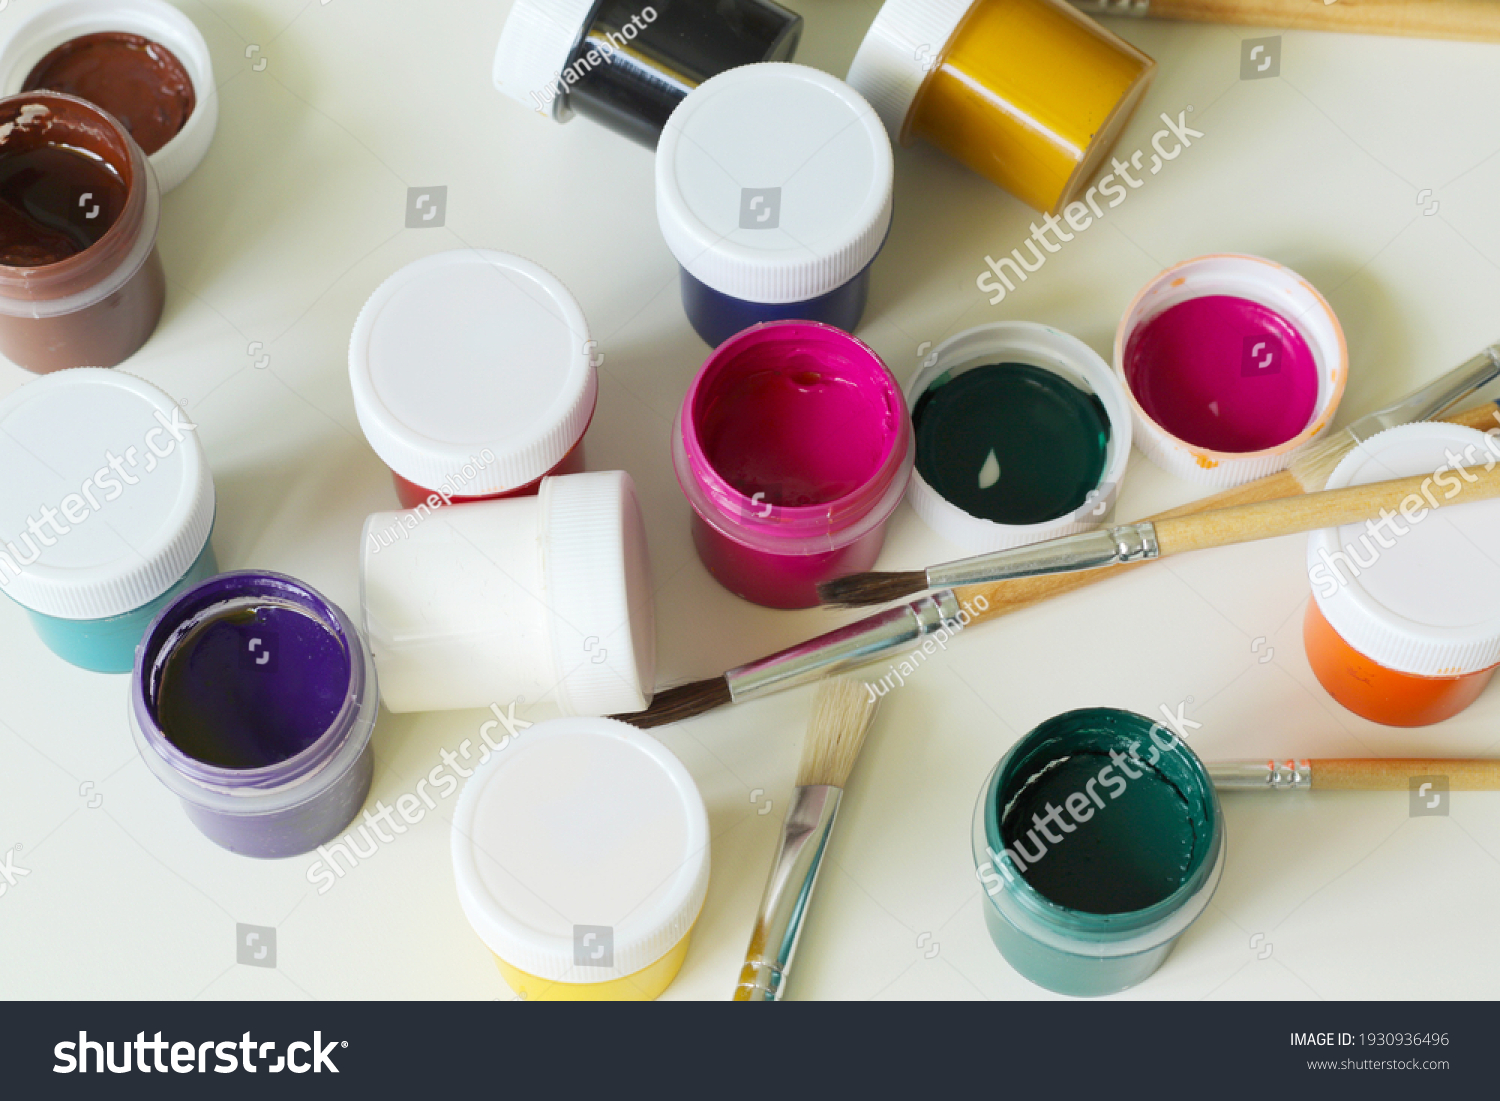 Paint Images, Stock Photos & Vectors | Shutterstock